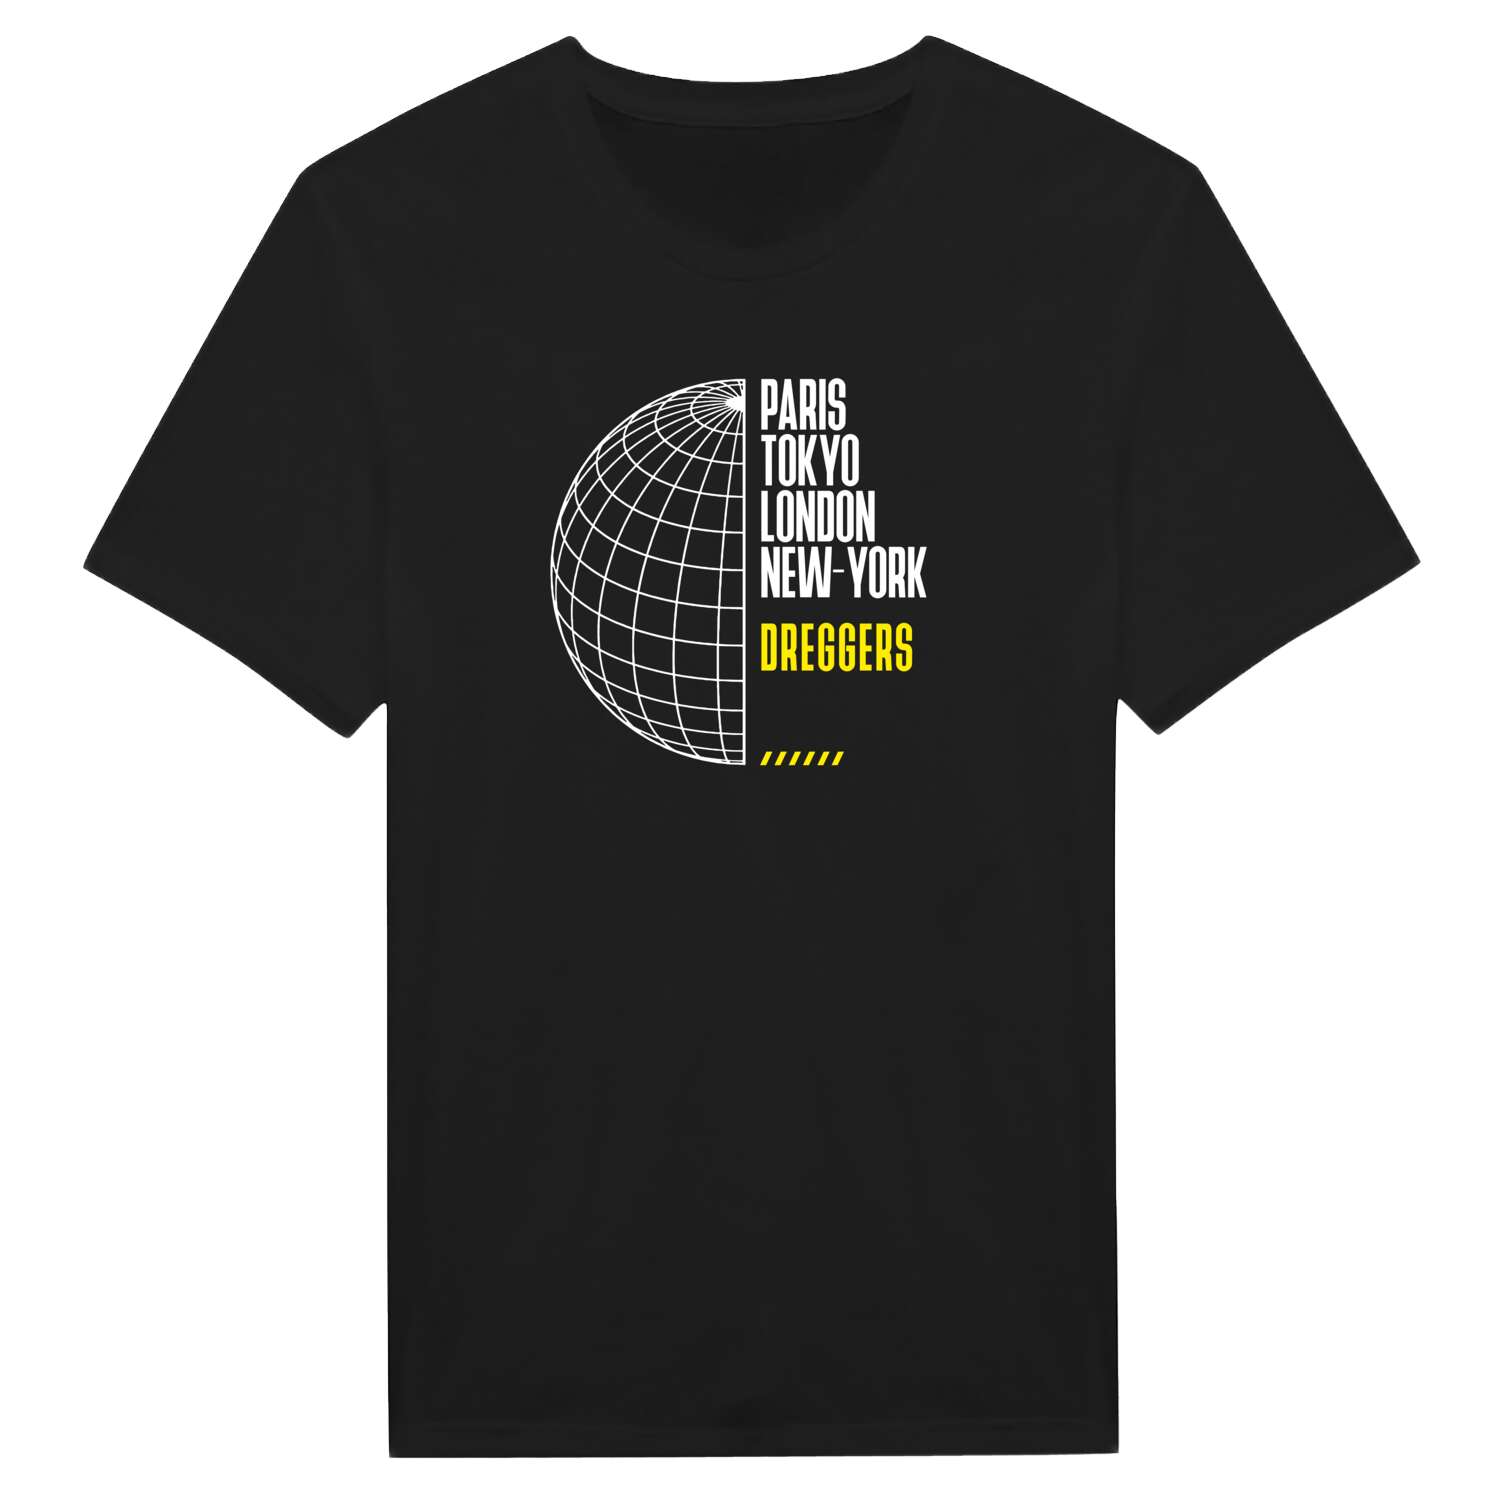 Dreggers T-Shirt »Paris Tokyo London«